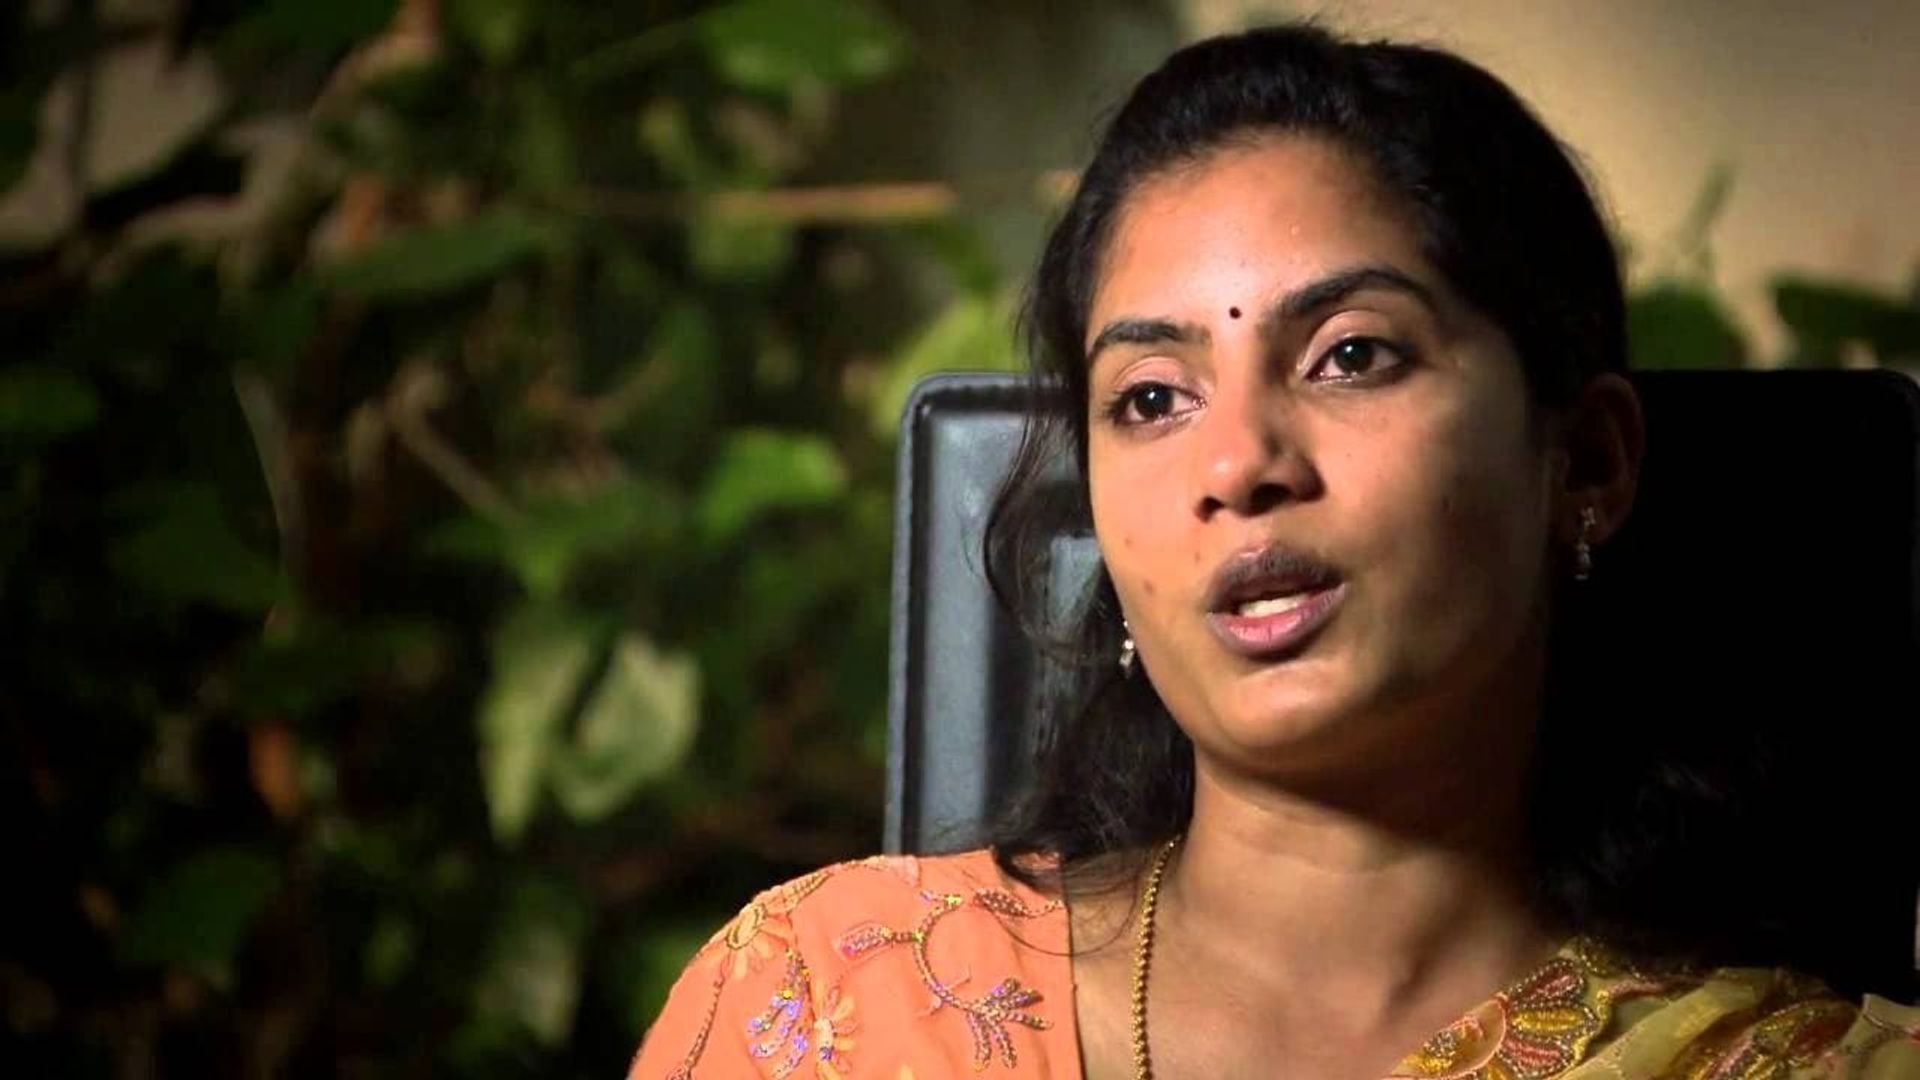 No Fire Zone: The Killing Fields of Sri Lanka background